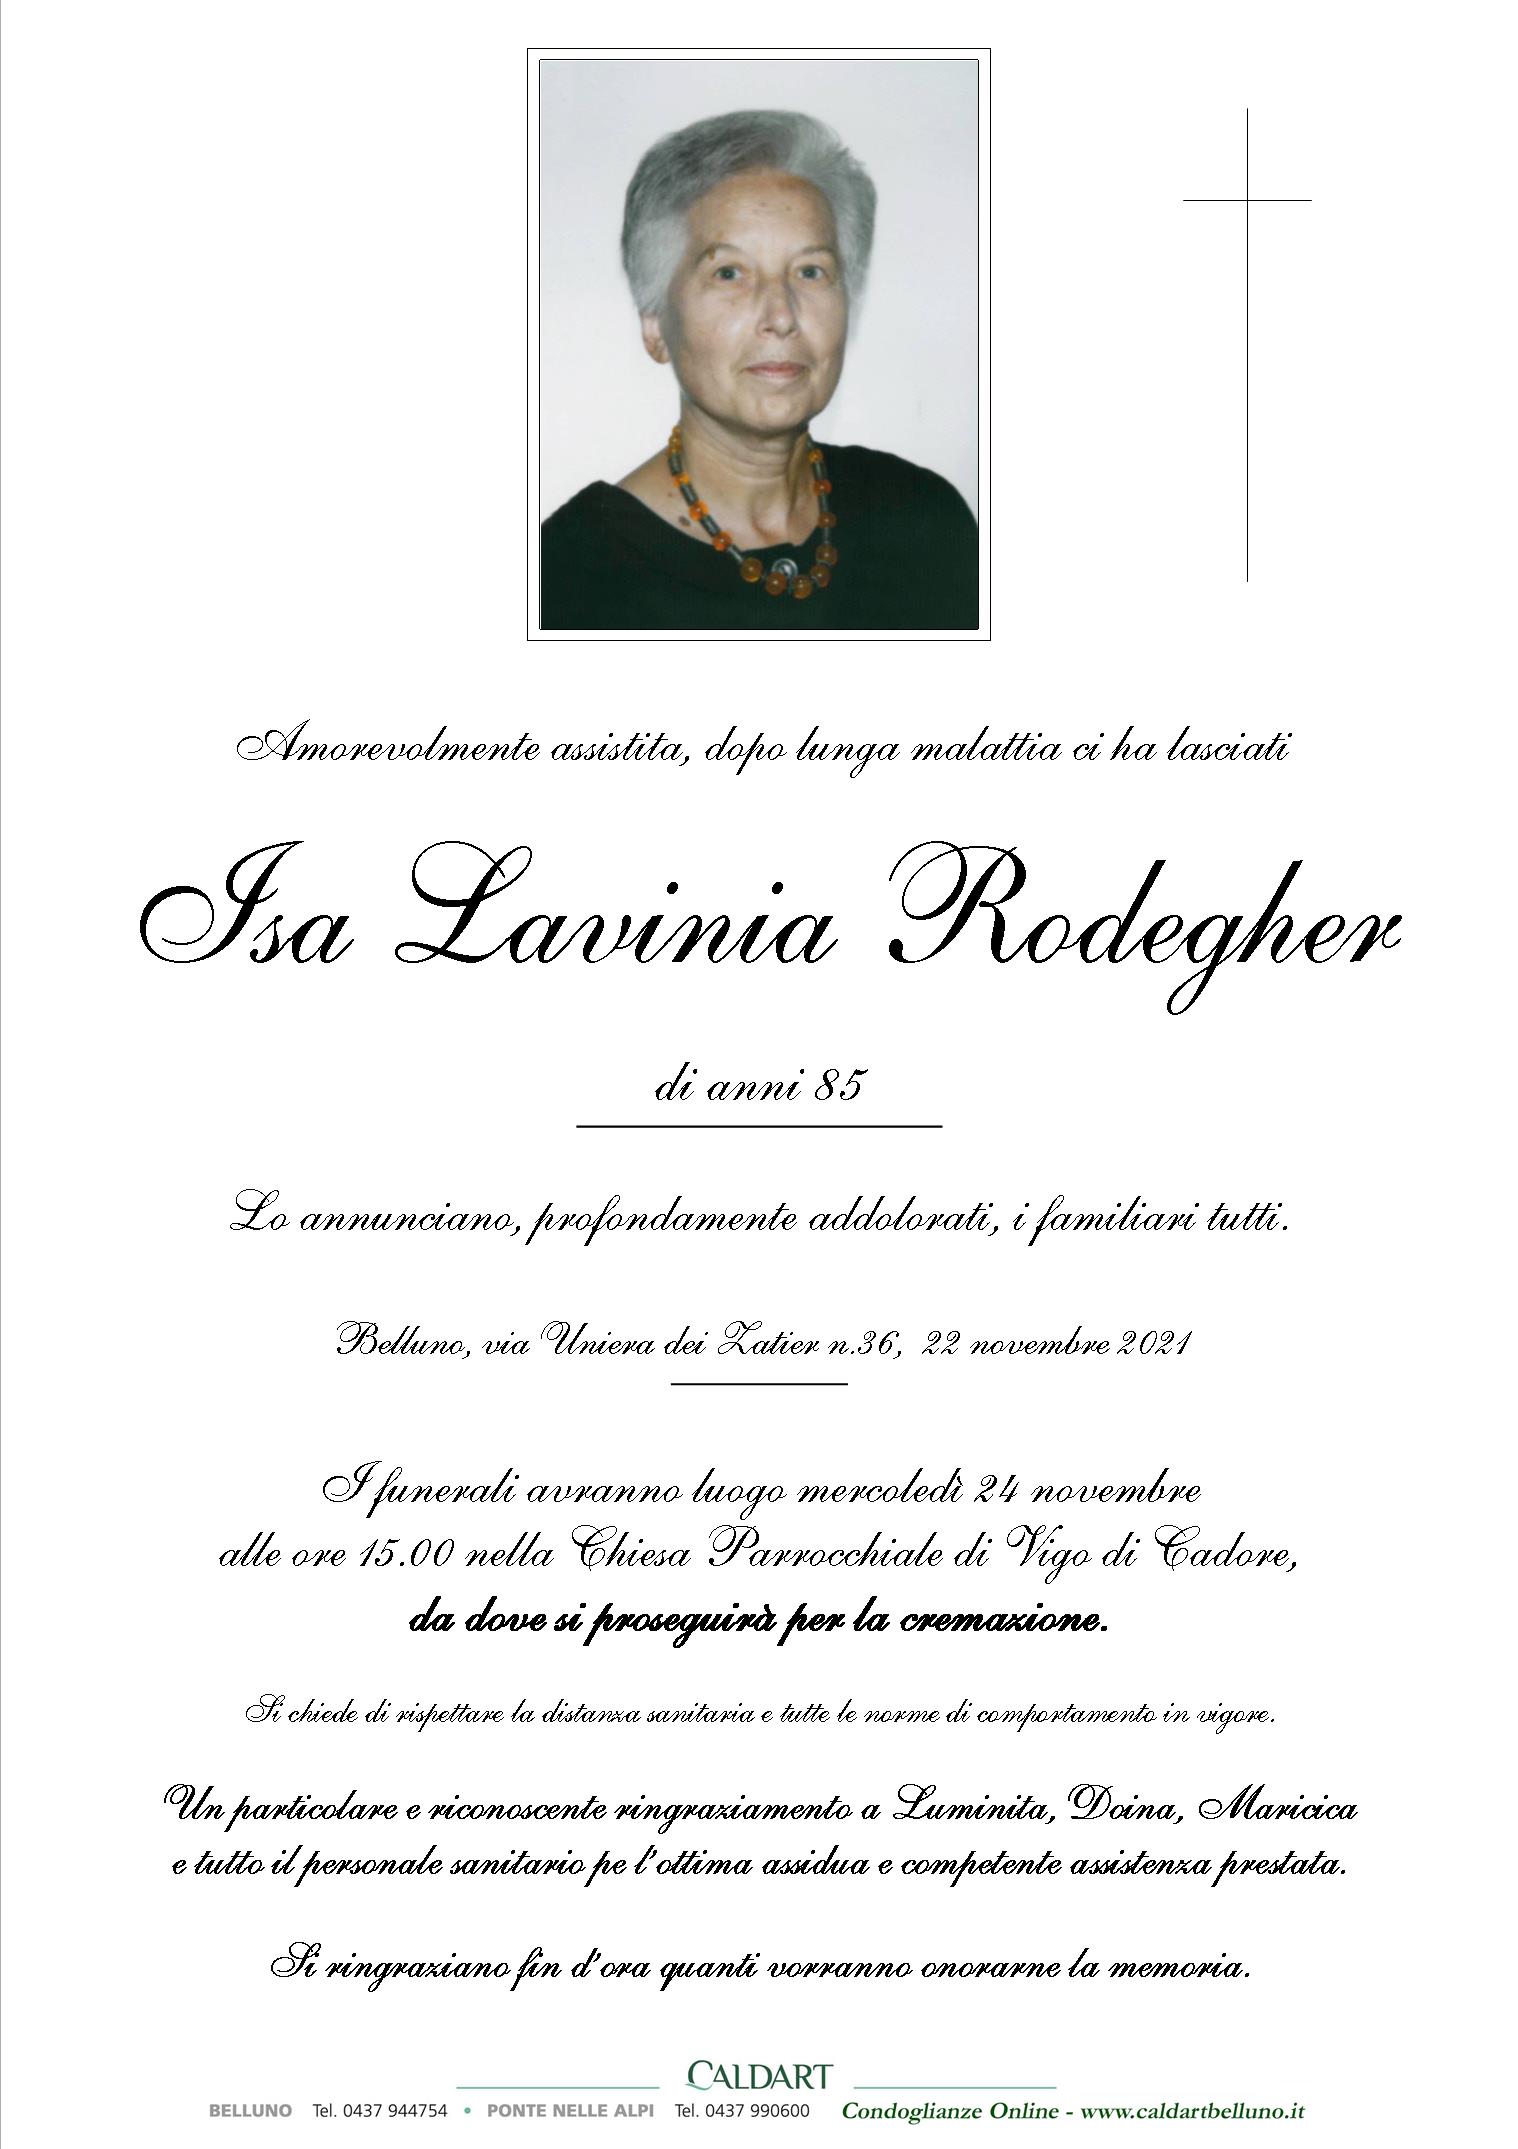 Rodegher Isa Lavinia